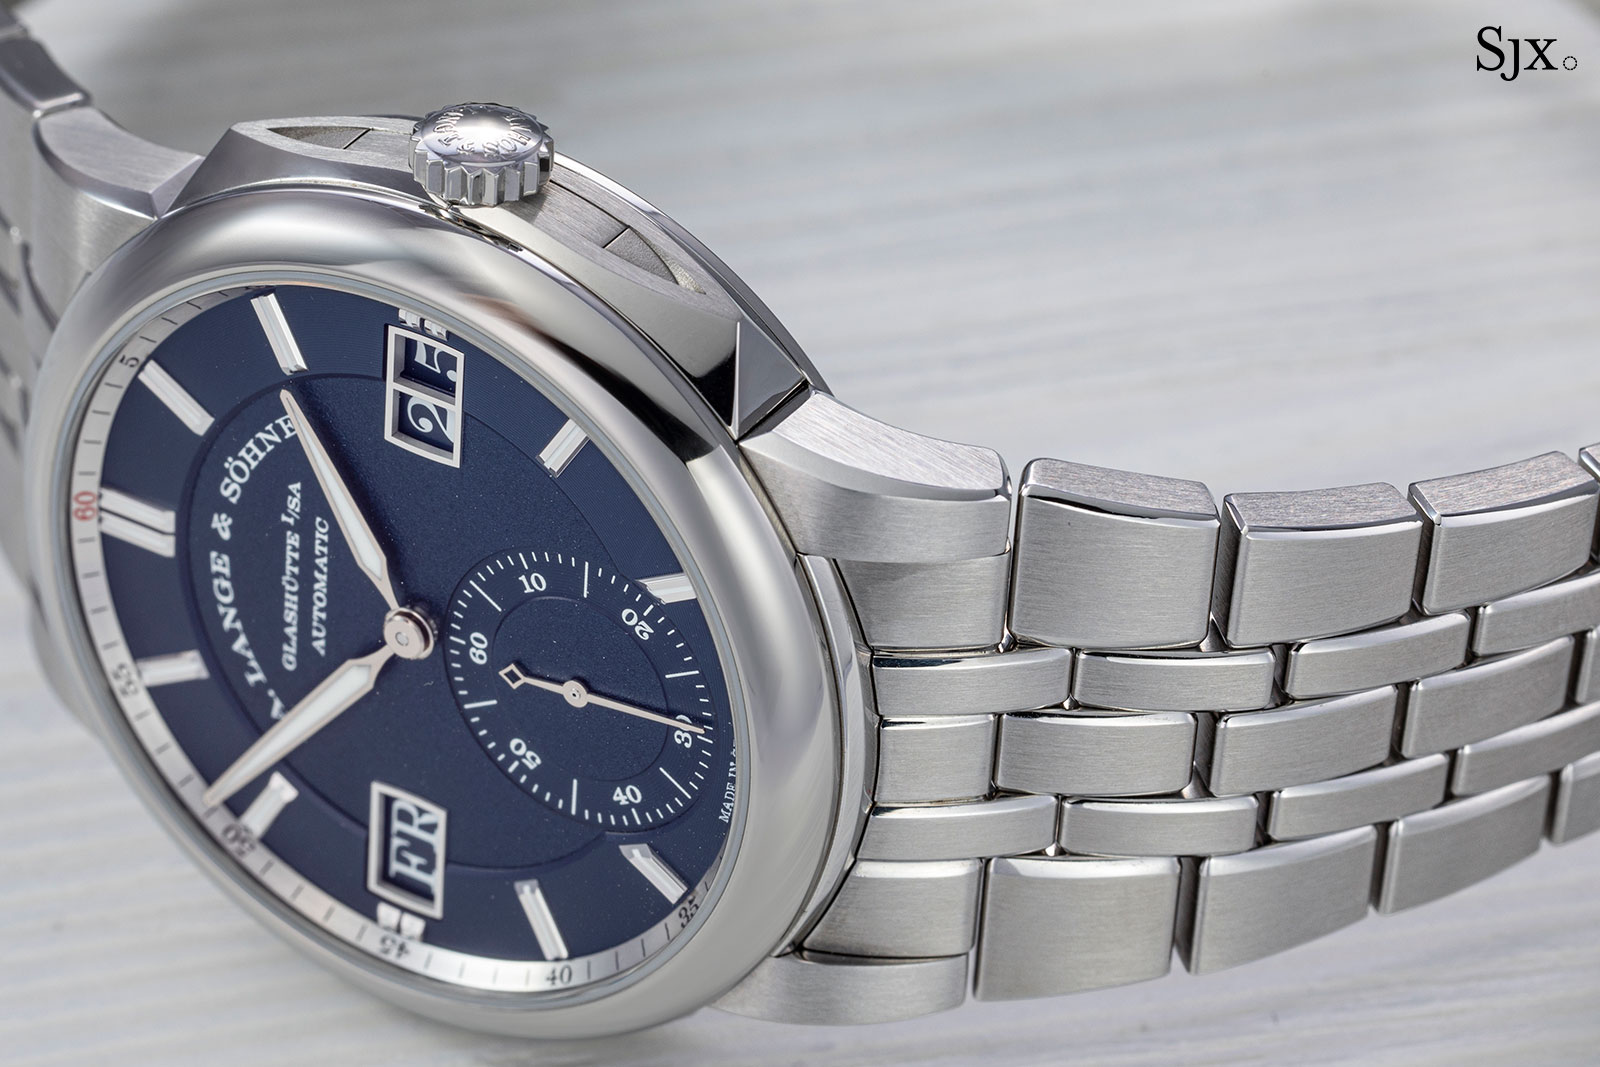 Richemont Announces 2020 Half-Year Sales Down 26% - Monochrome Watches